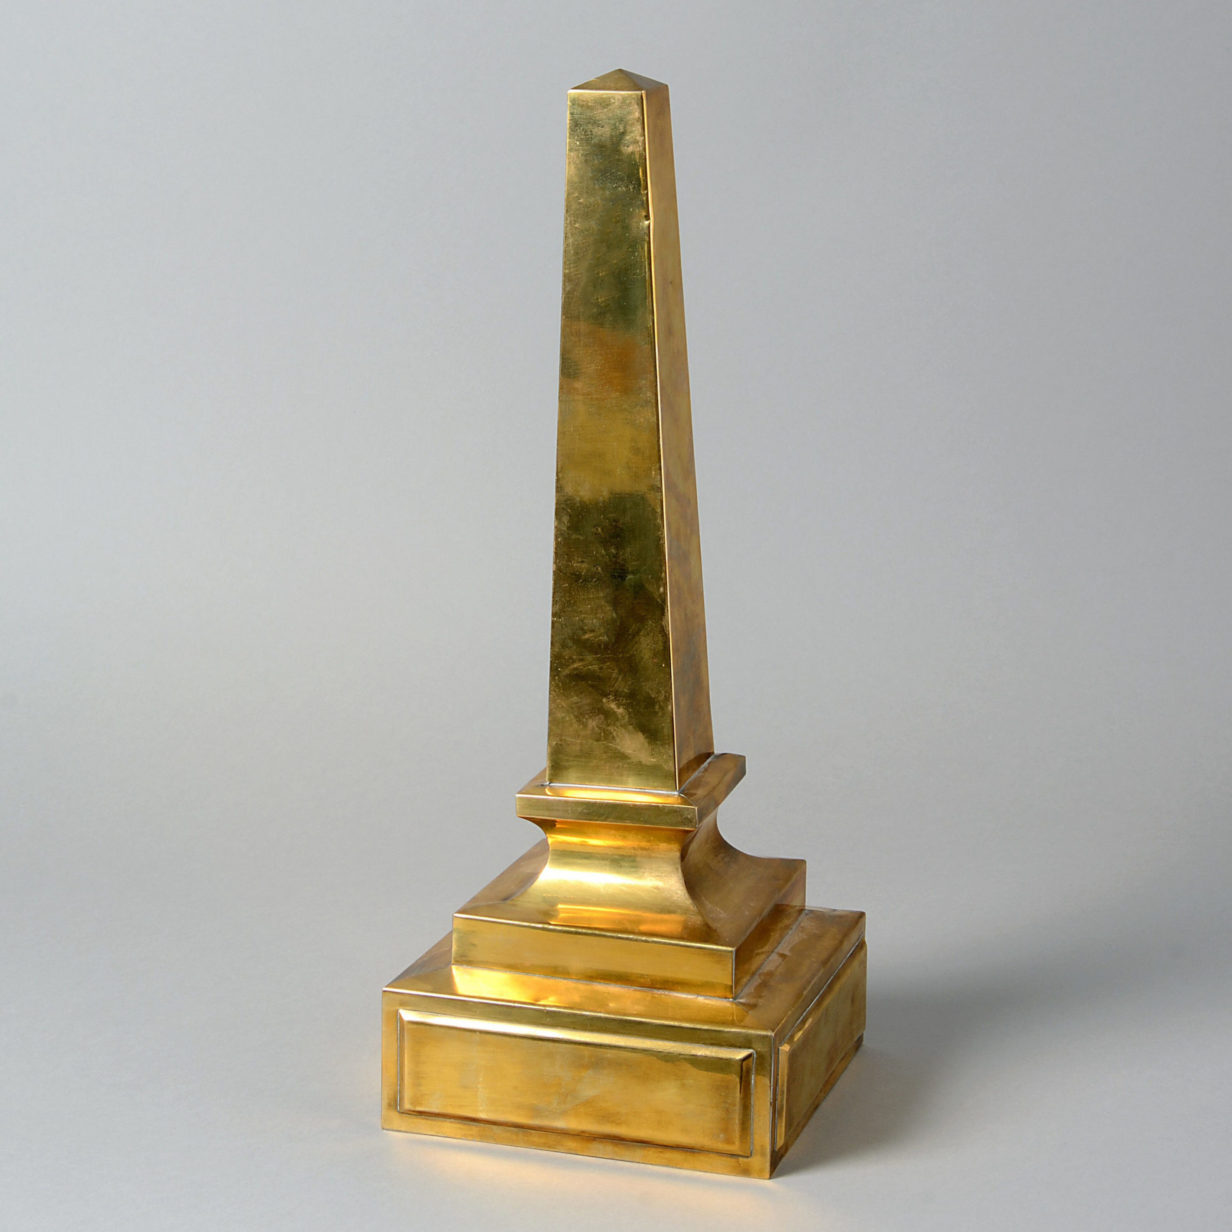 A mid-20th century brass obelisk